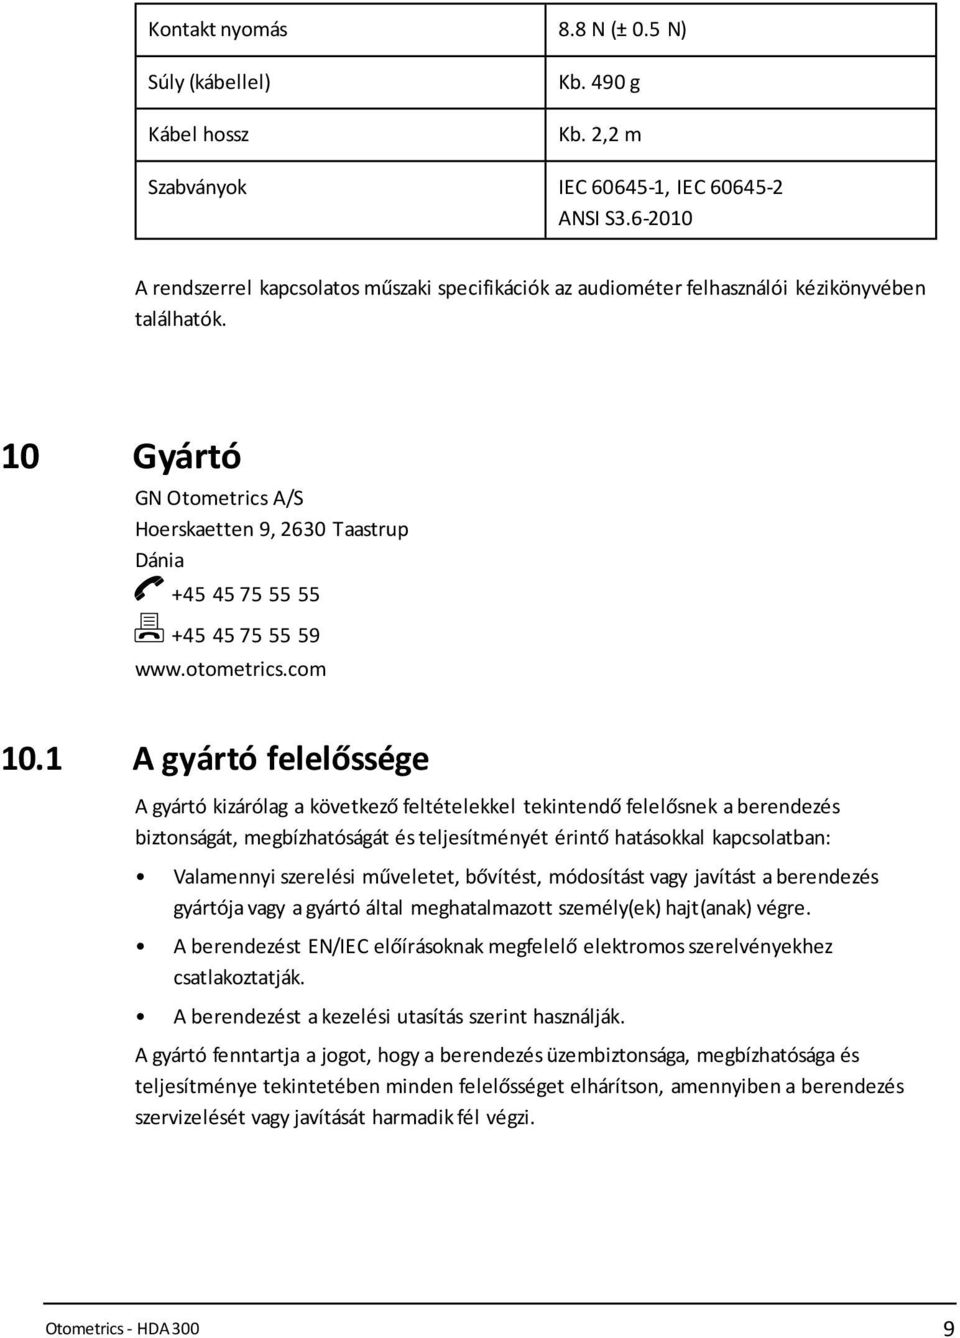 10 Gyártó GN Otometrics A/S Hoerskaetten 9, 2630 Taastrup Dánia +45 45 75 55 55 +45 45 75 55 59 www.otometrics.com 10.